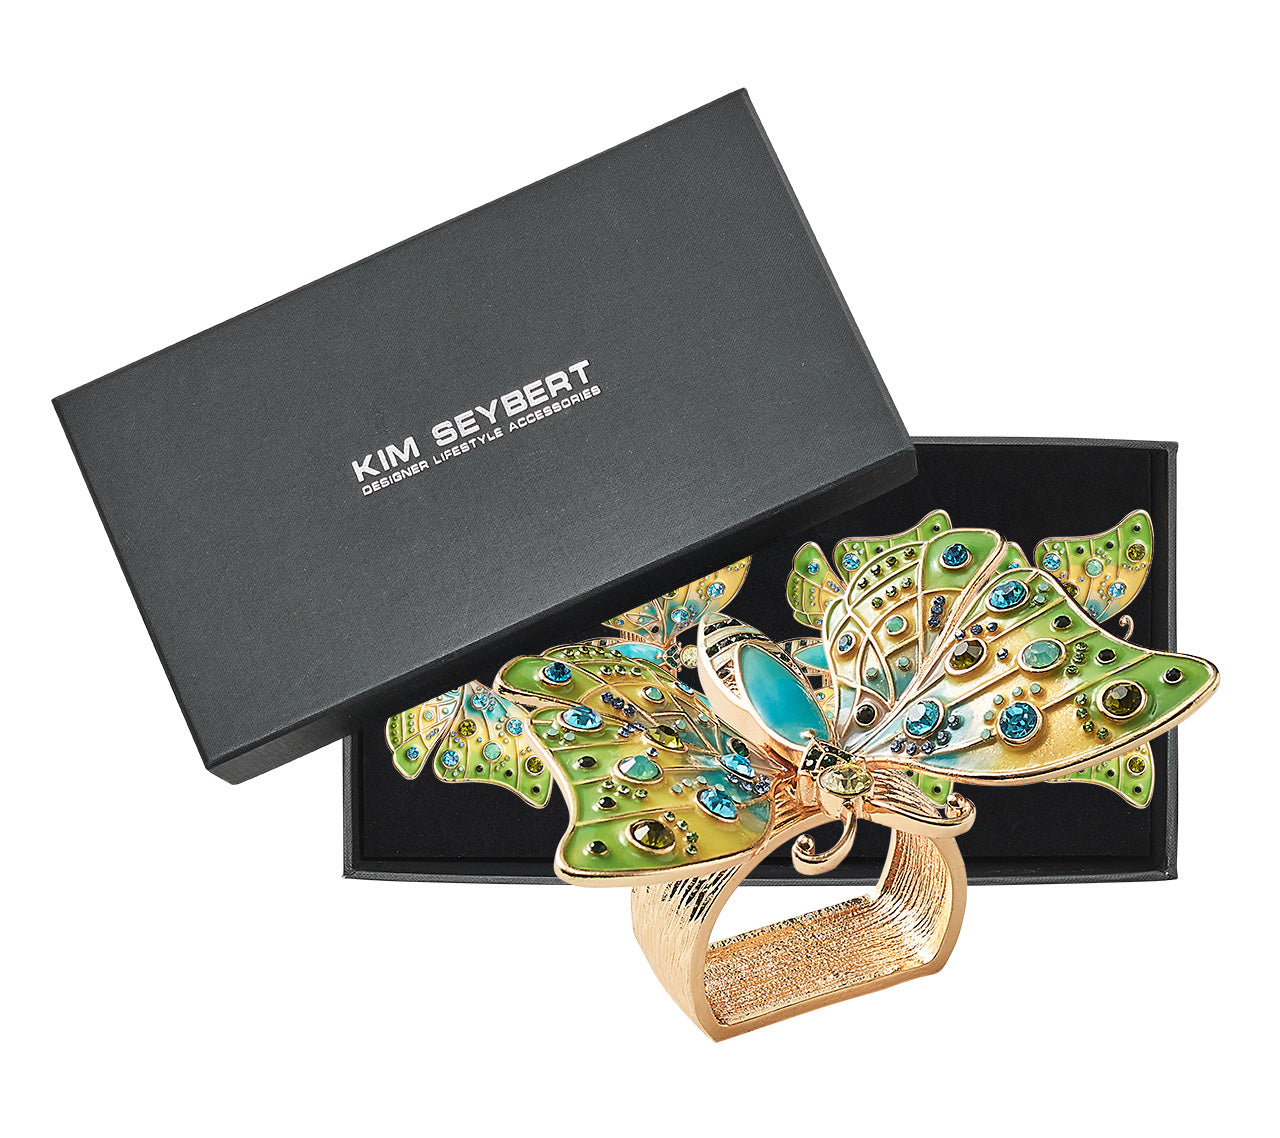 Kim Seybert Luxury Arbor Napkin Ring in Blue & Green in a Gift Box